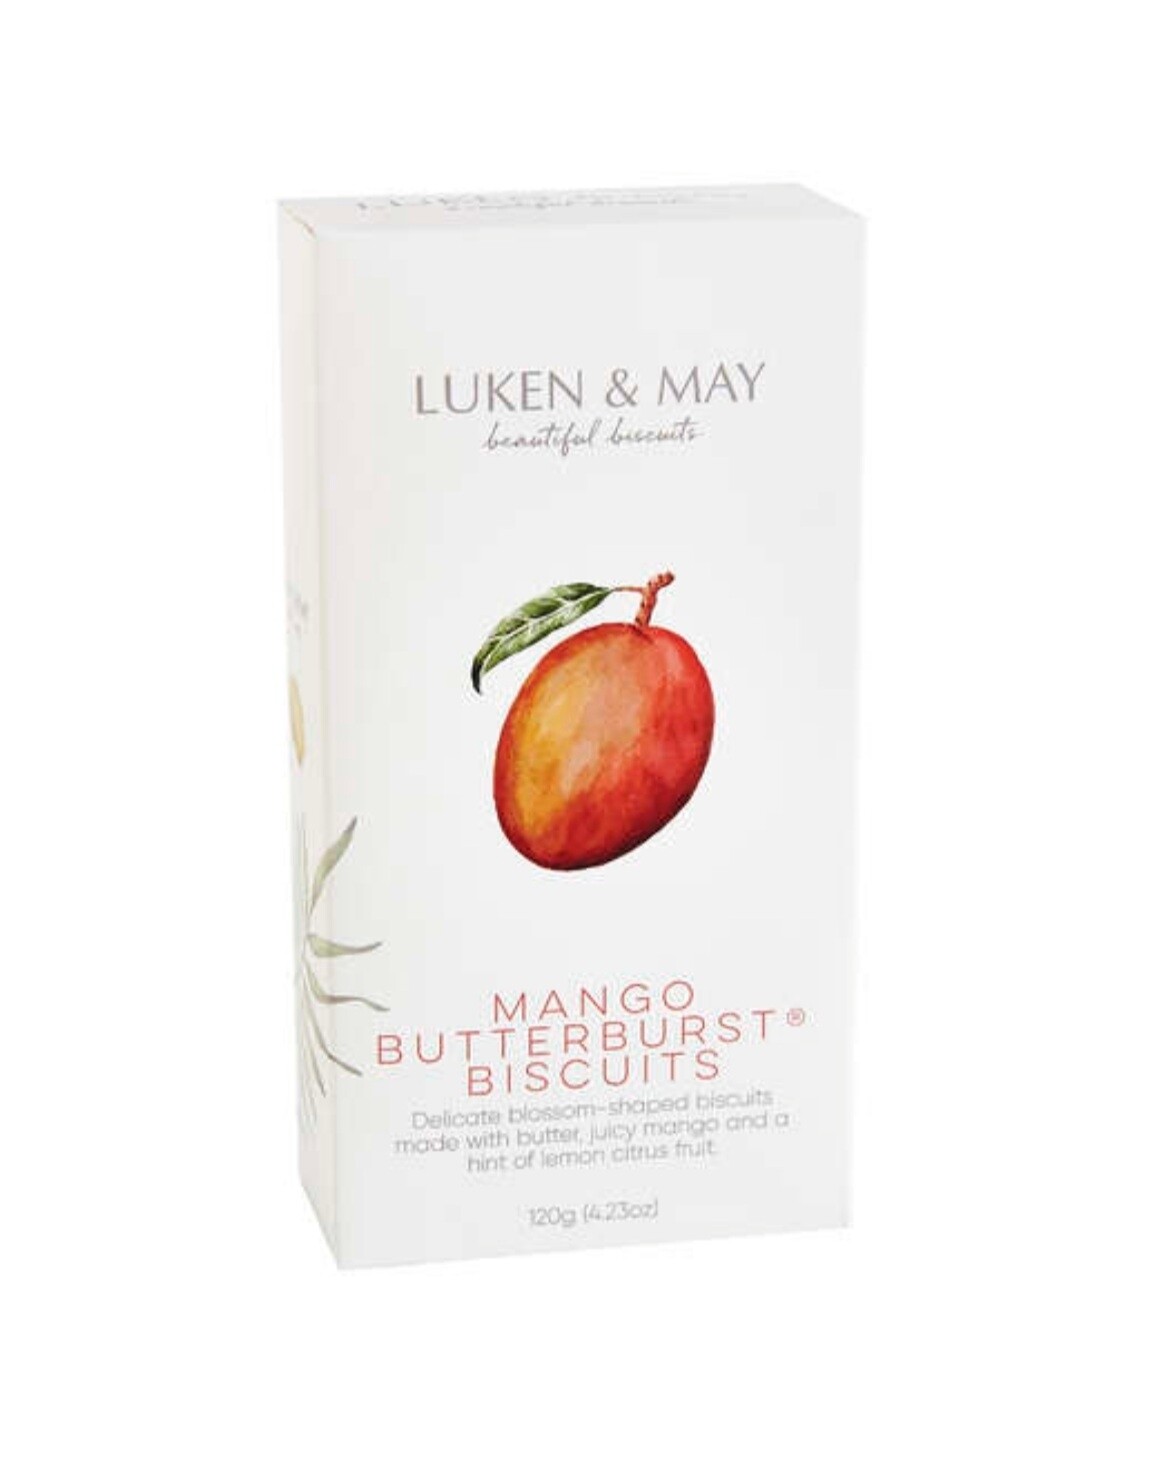 Luken & May Gift Box Mango Butterburst Biscuits 120g